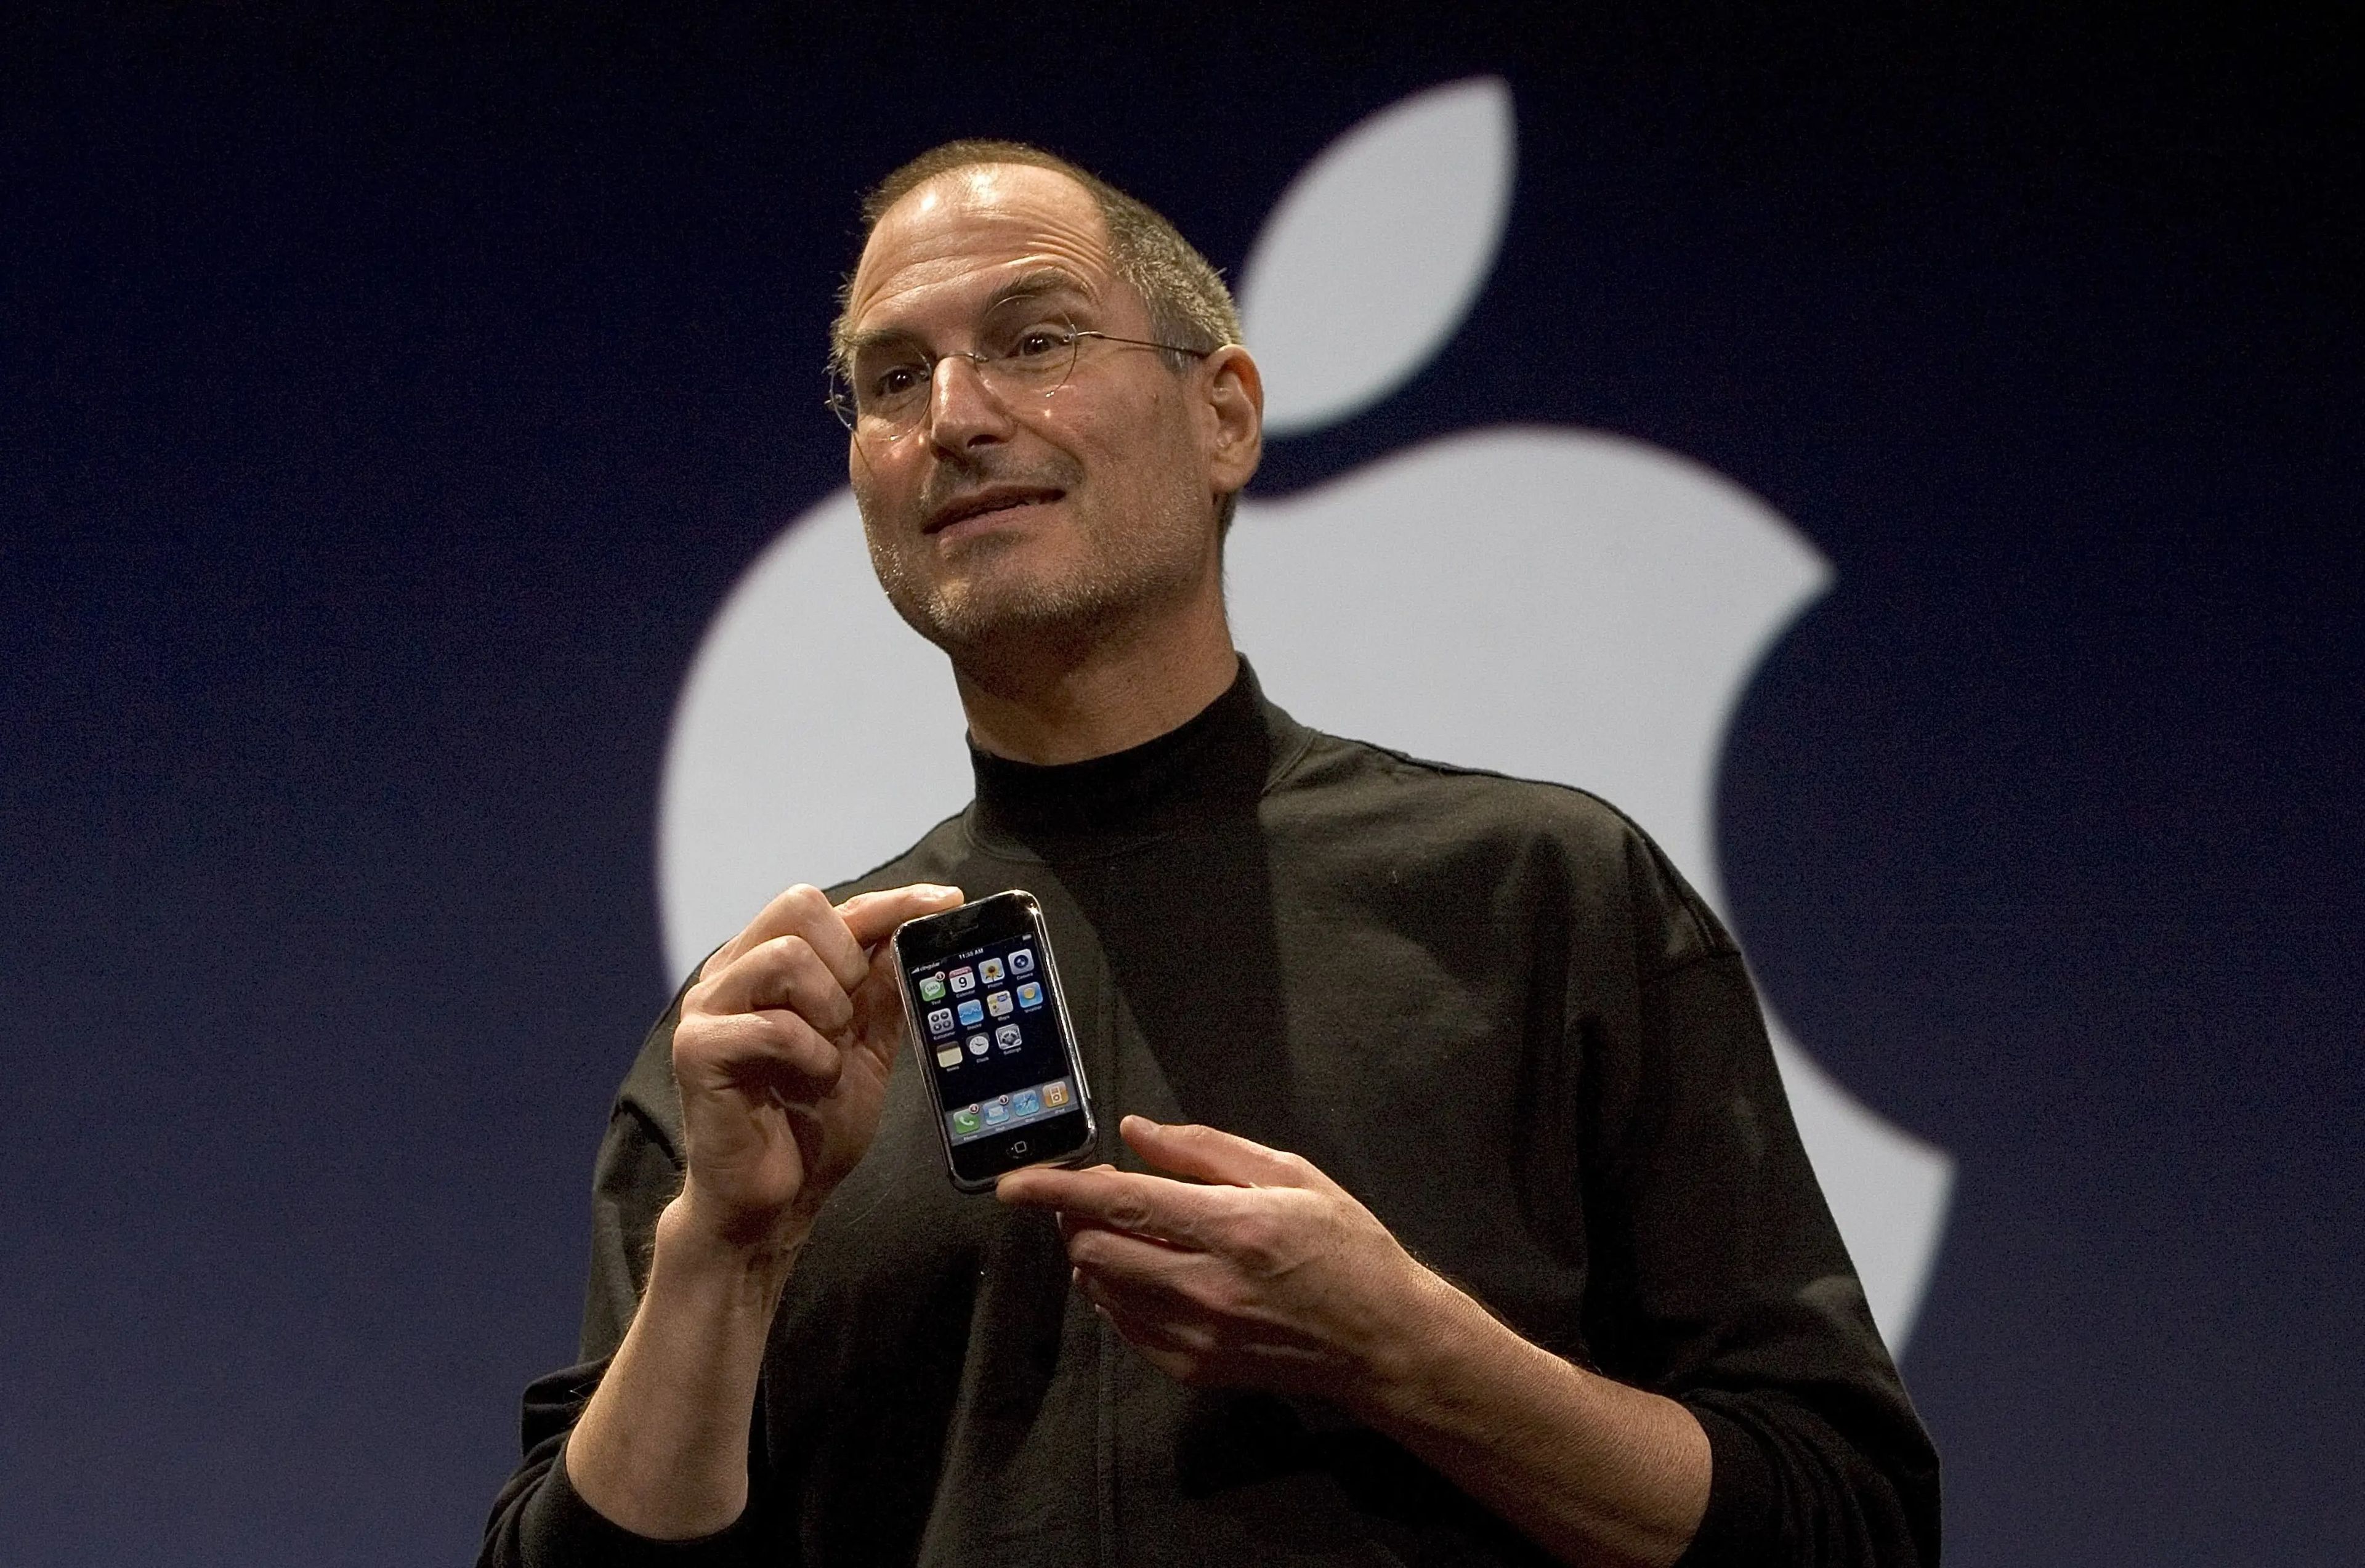 Steve Jobs original iPhone 2007